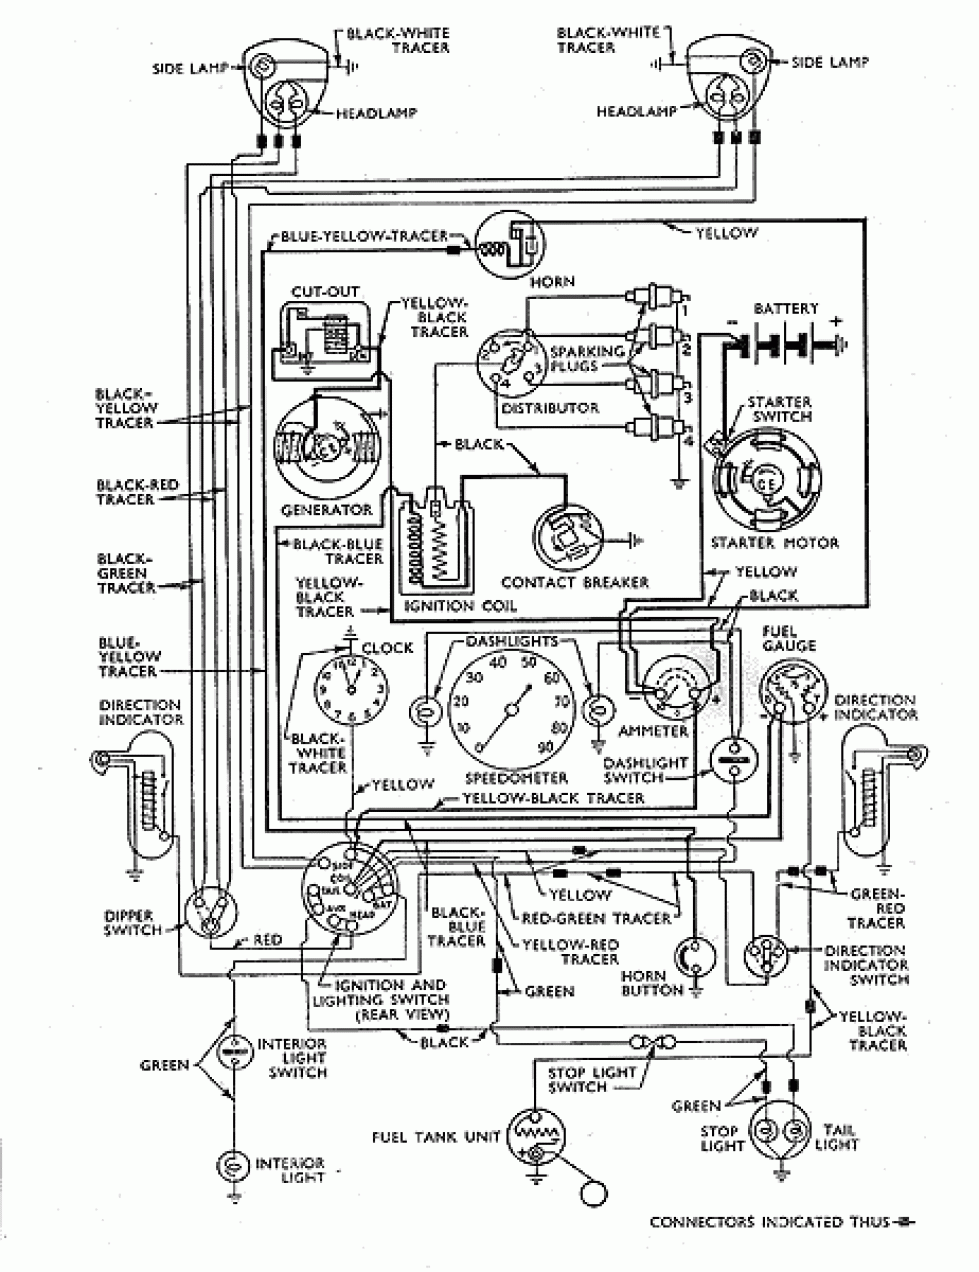 130: wiring diagram Prefect 3 brush dynamo pre 1945 | Small Ford Spares